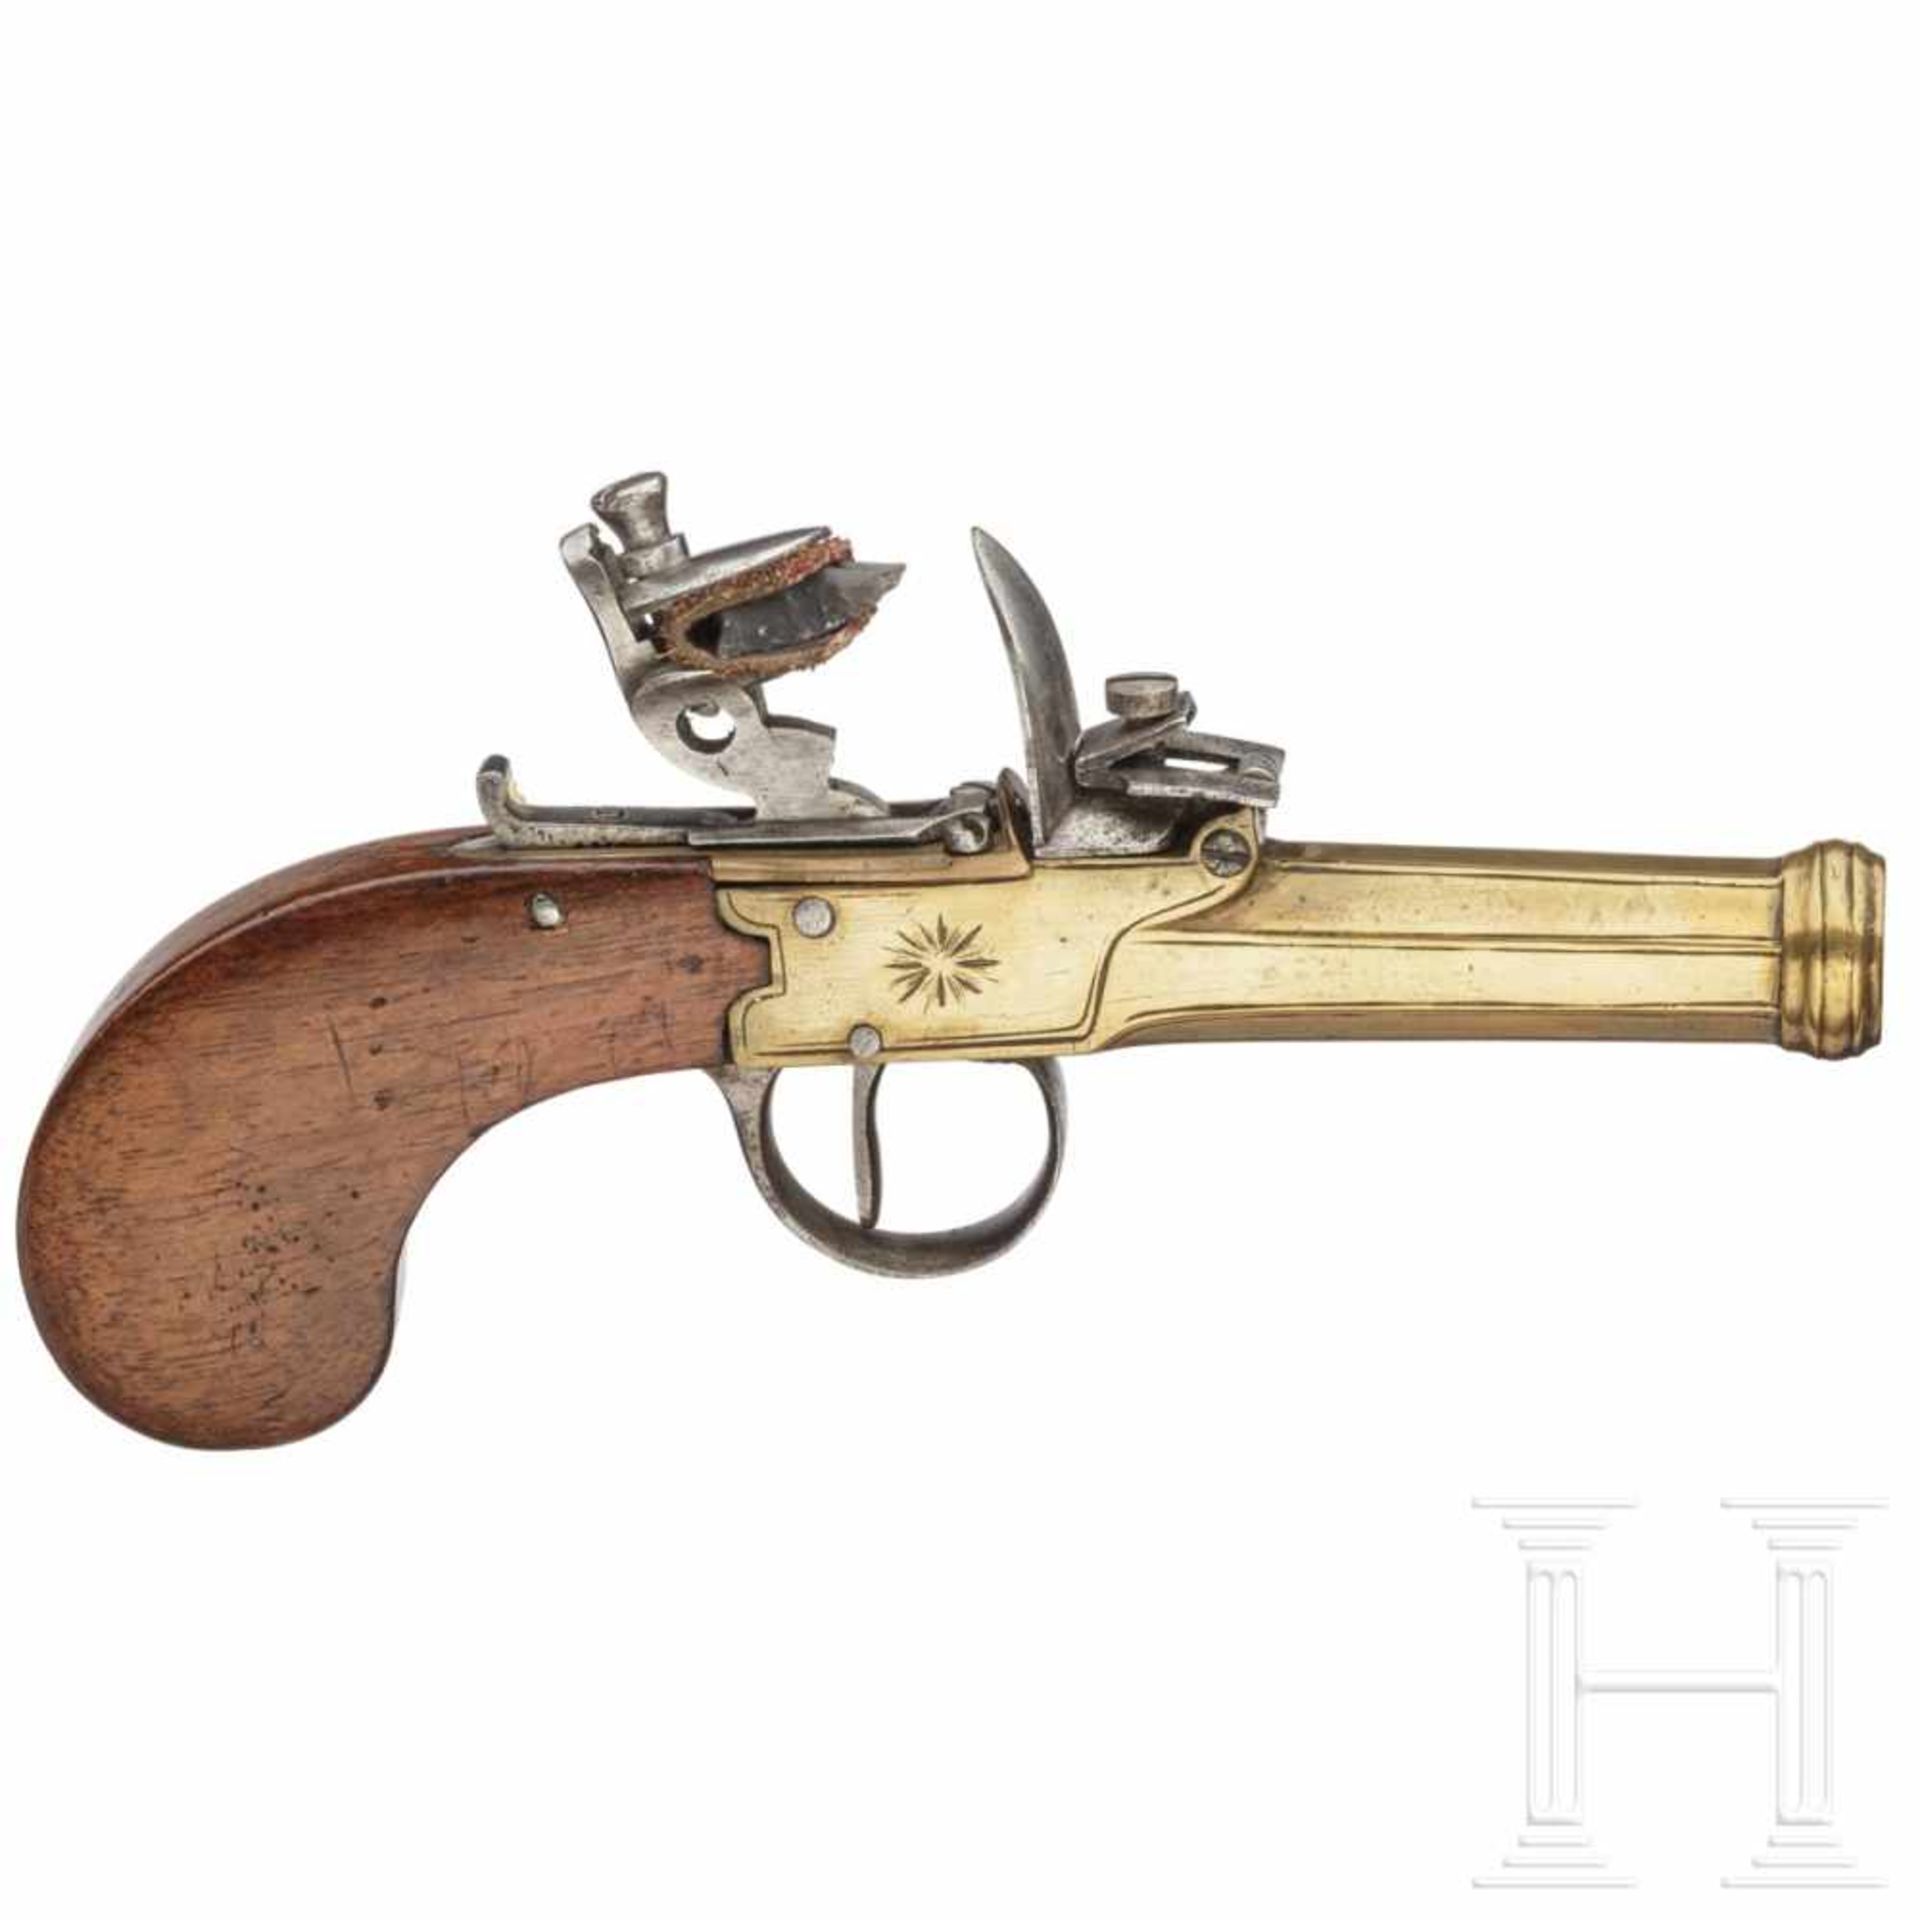 A boxlock pistol with brass barrel, Liège (?), end of 18th centuryOktagonaler, glatter Lauf im